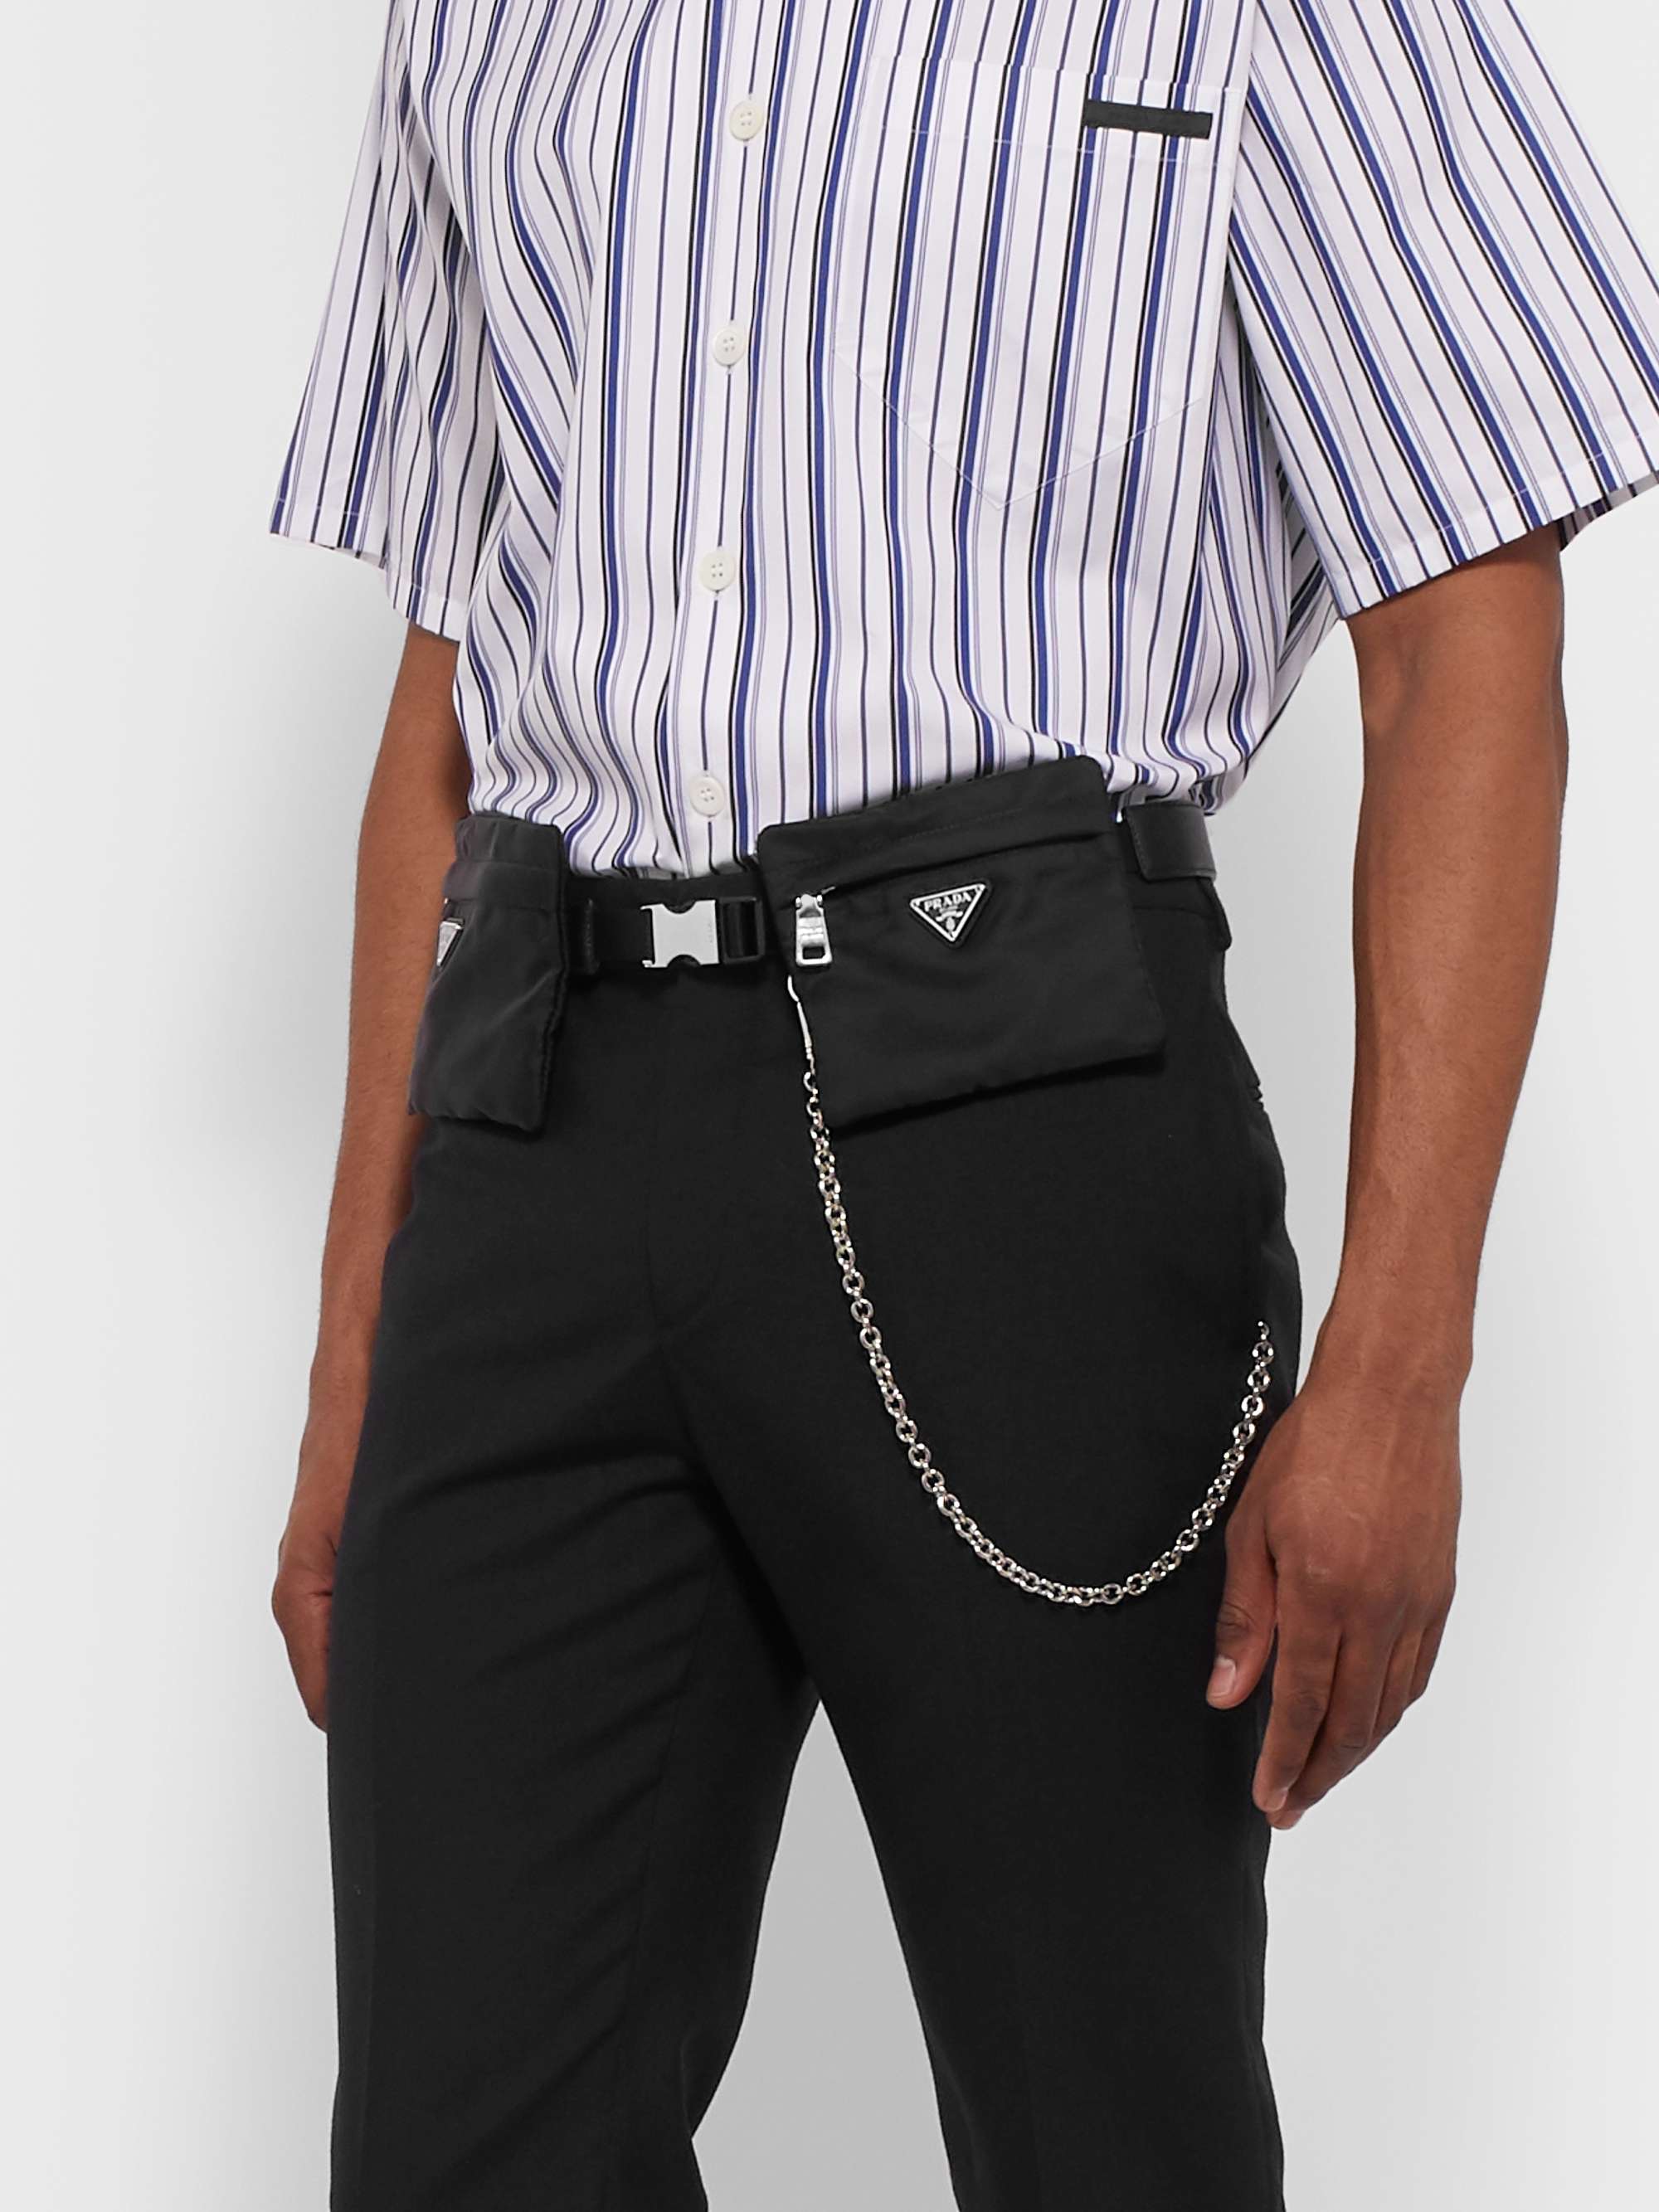 PRADA 3cm Saffiano Leather-Trimmed Webbing Belt with Detachable Pouches